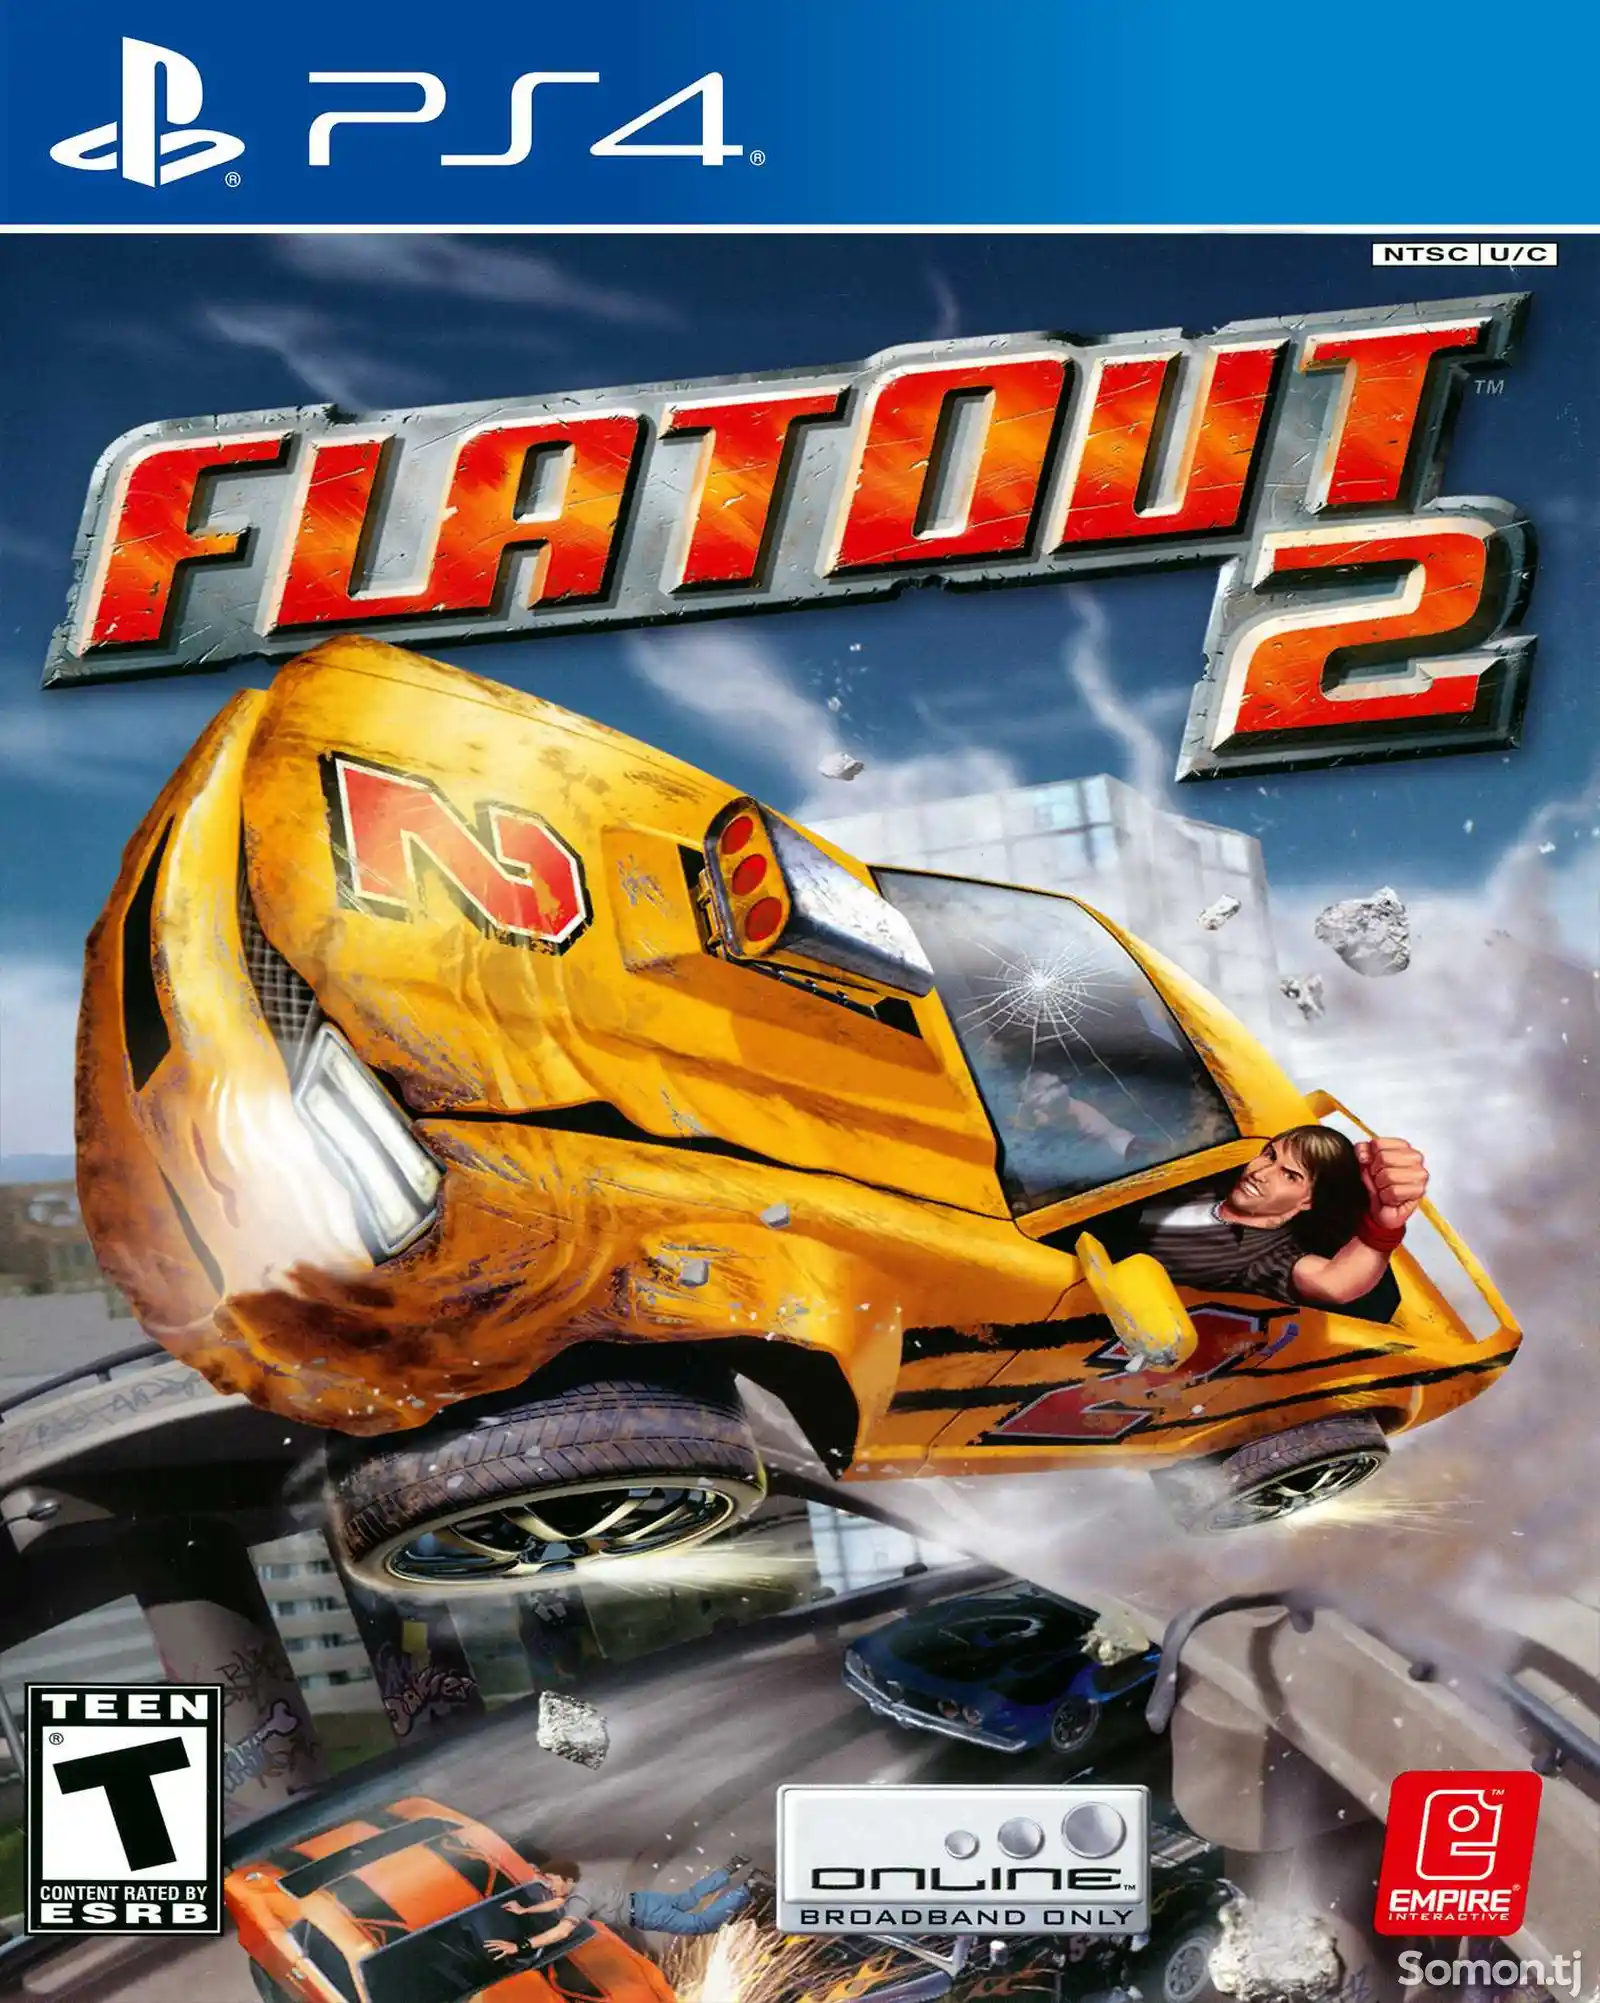 Игра Flatout 2 для PS-4 / 5.05 / 6.72 / 7.02 / 7.55 / 9.00 /-1